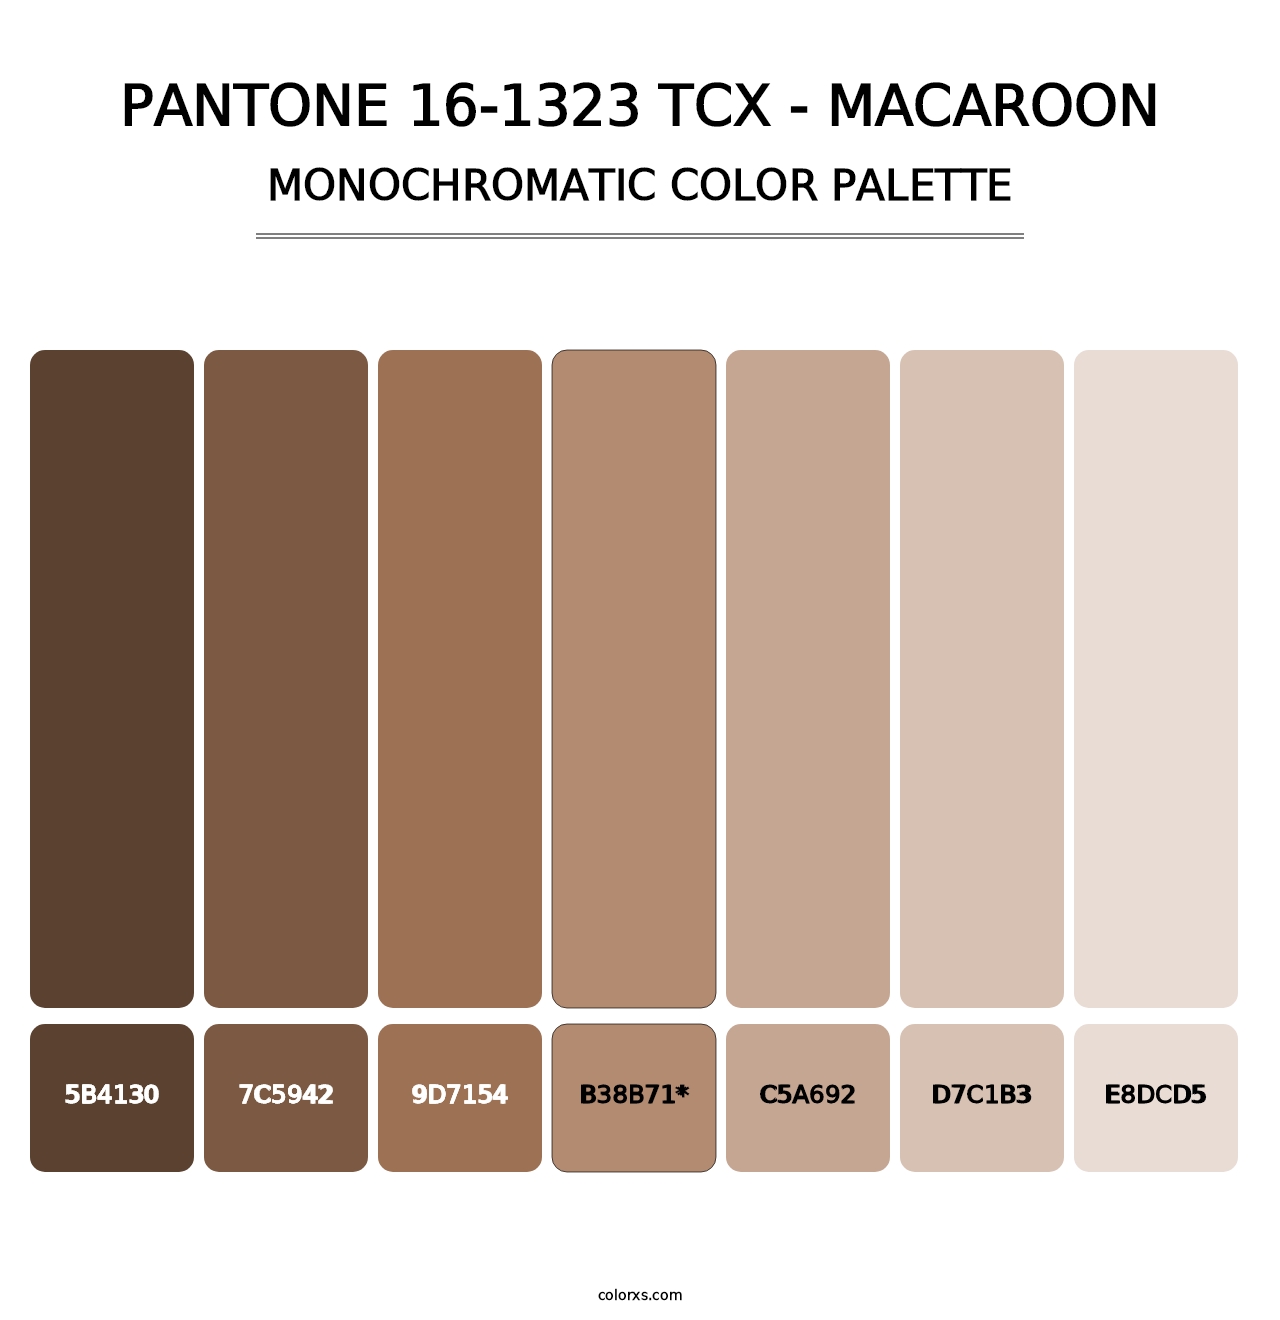 PANTONE 16-1323 TCX - Macaroon - Monochromatic Color Palette